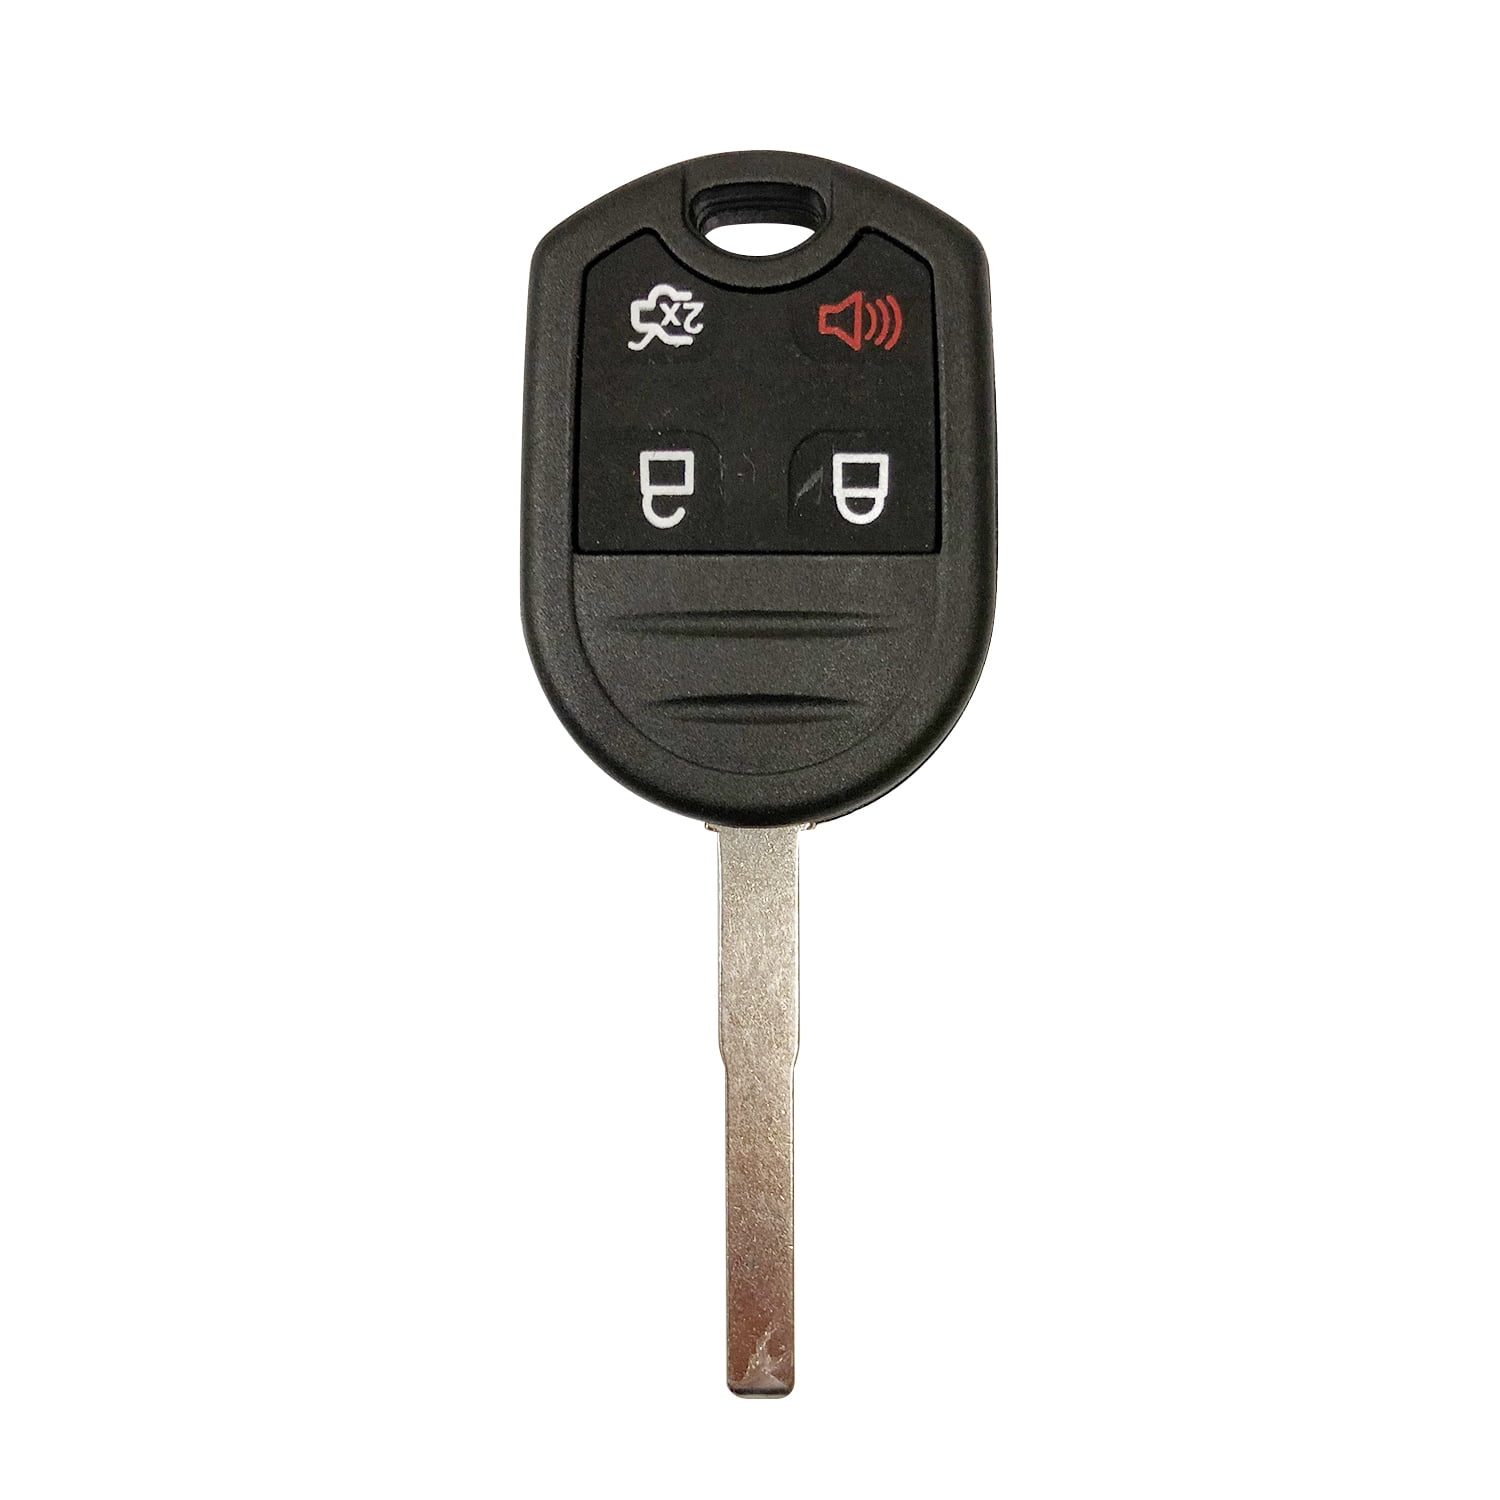 2 For 2012 2013 2014 2015 2016 Ford Escape Fiesta Uncut Car Remote Key Fob 